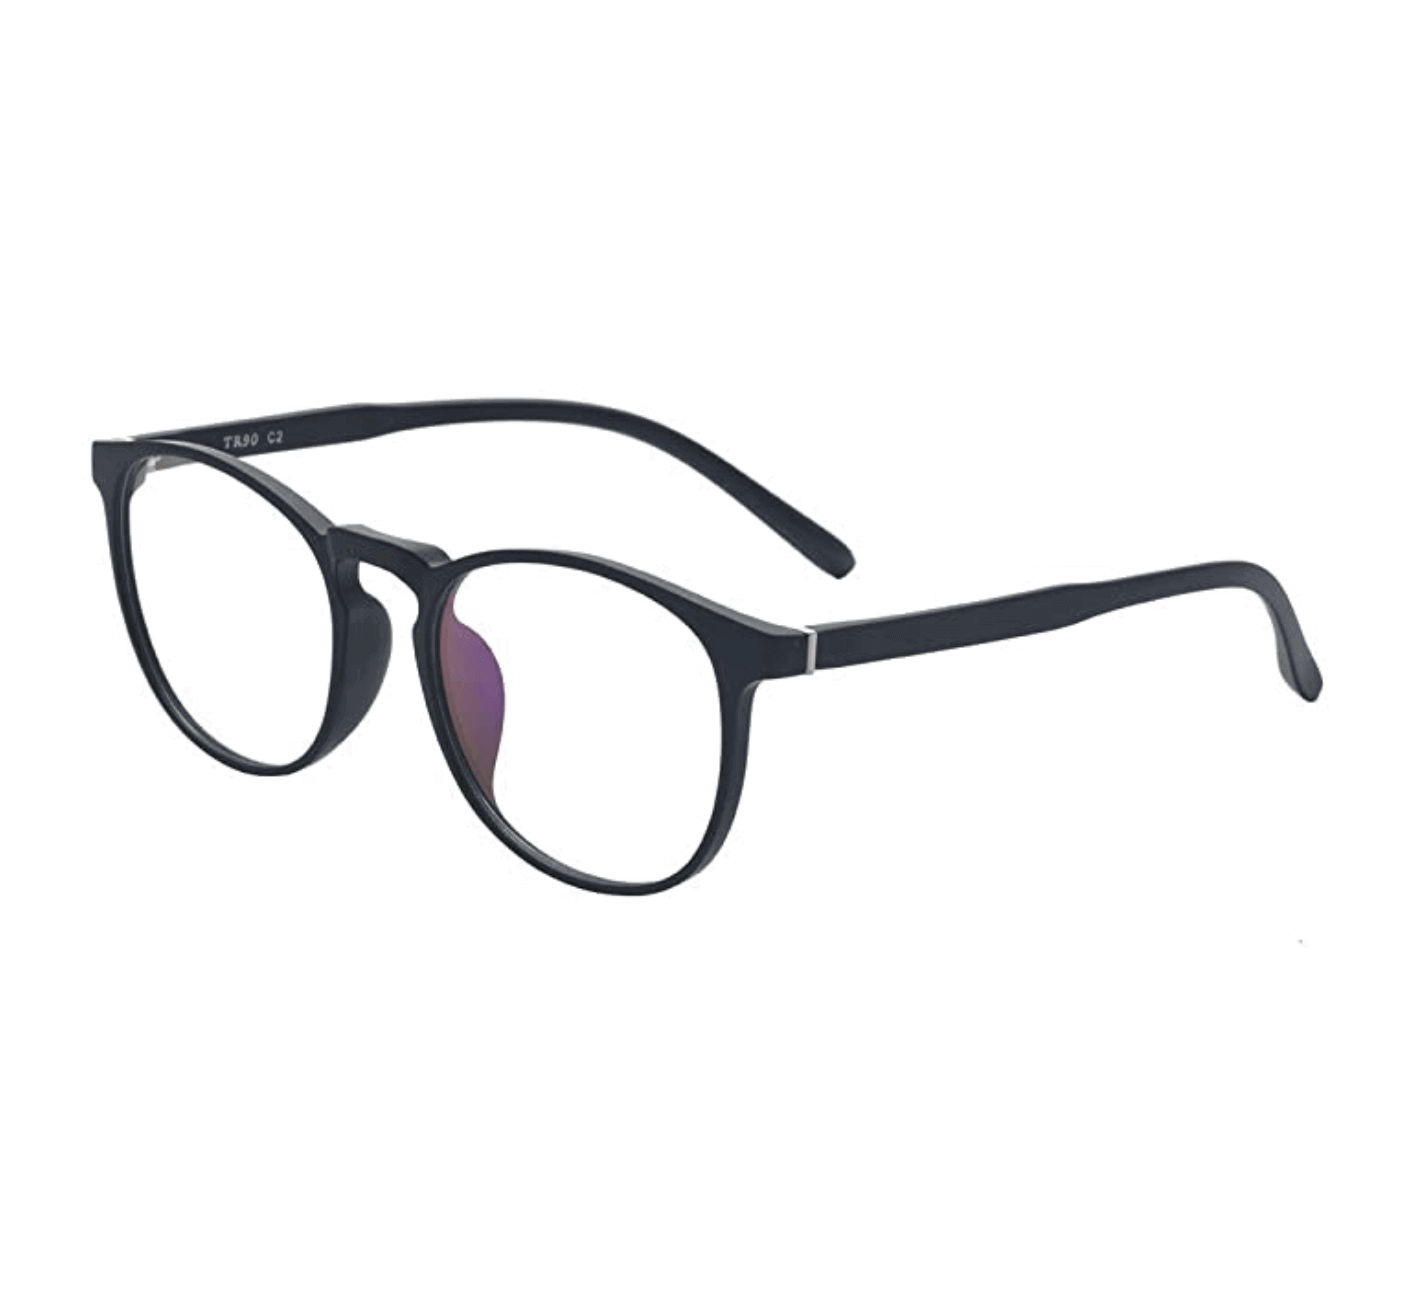 TR90 Glasses Frame, china glasses manufacturer